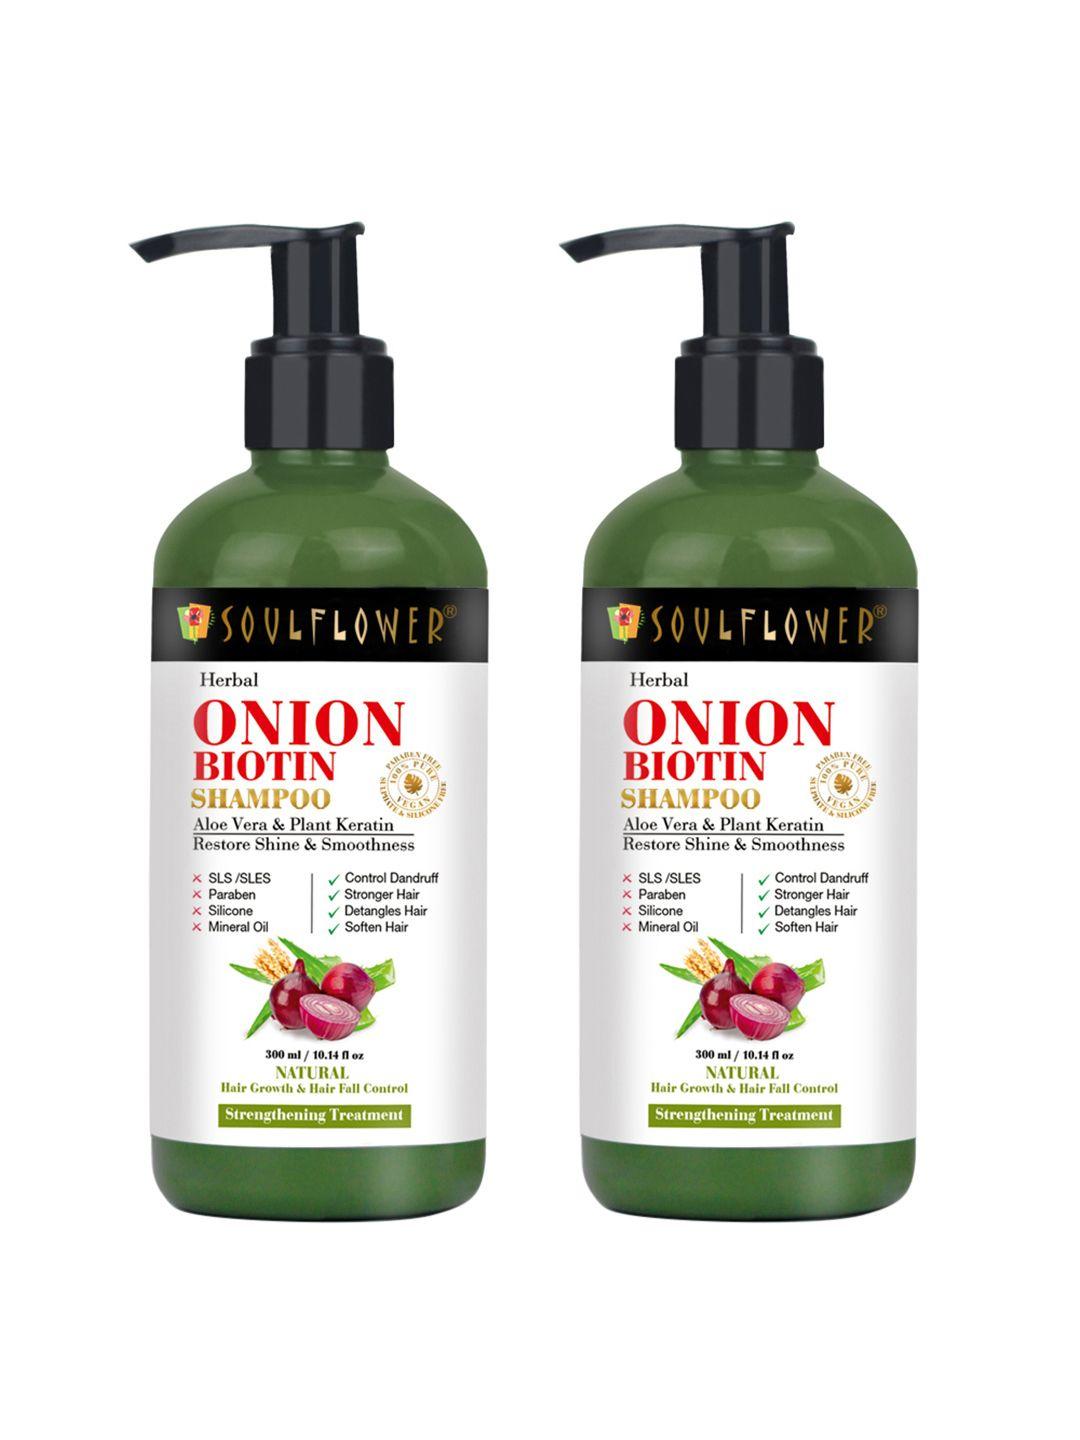 soulflower set of 2 onion biotin shampoo with aloe vera & plant keratin - 300ml each